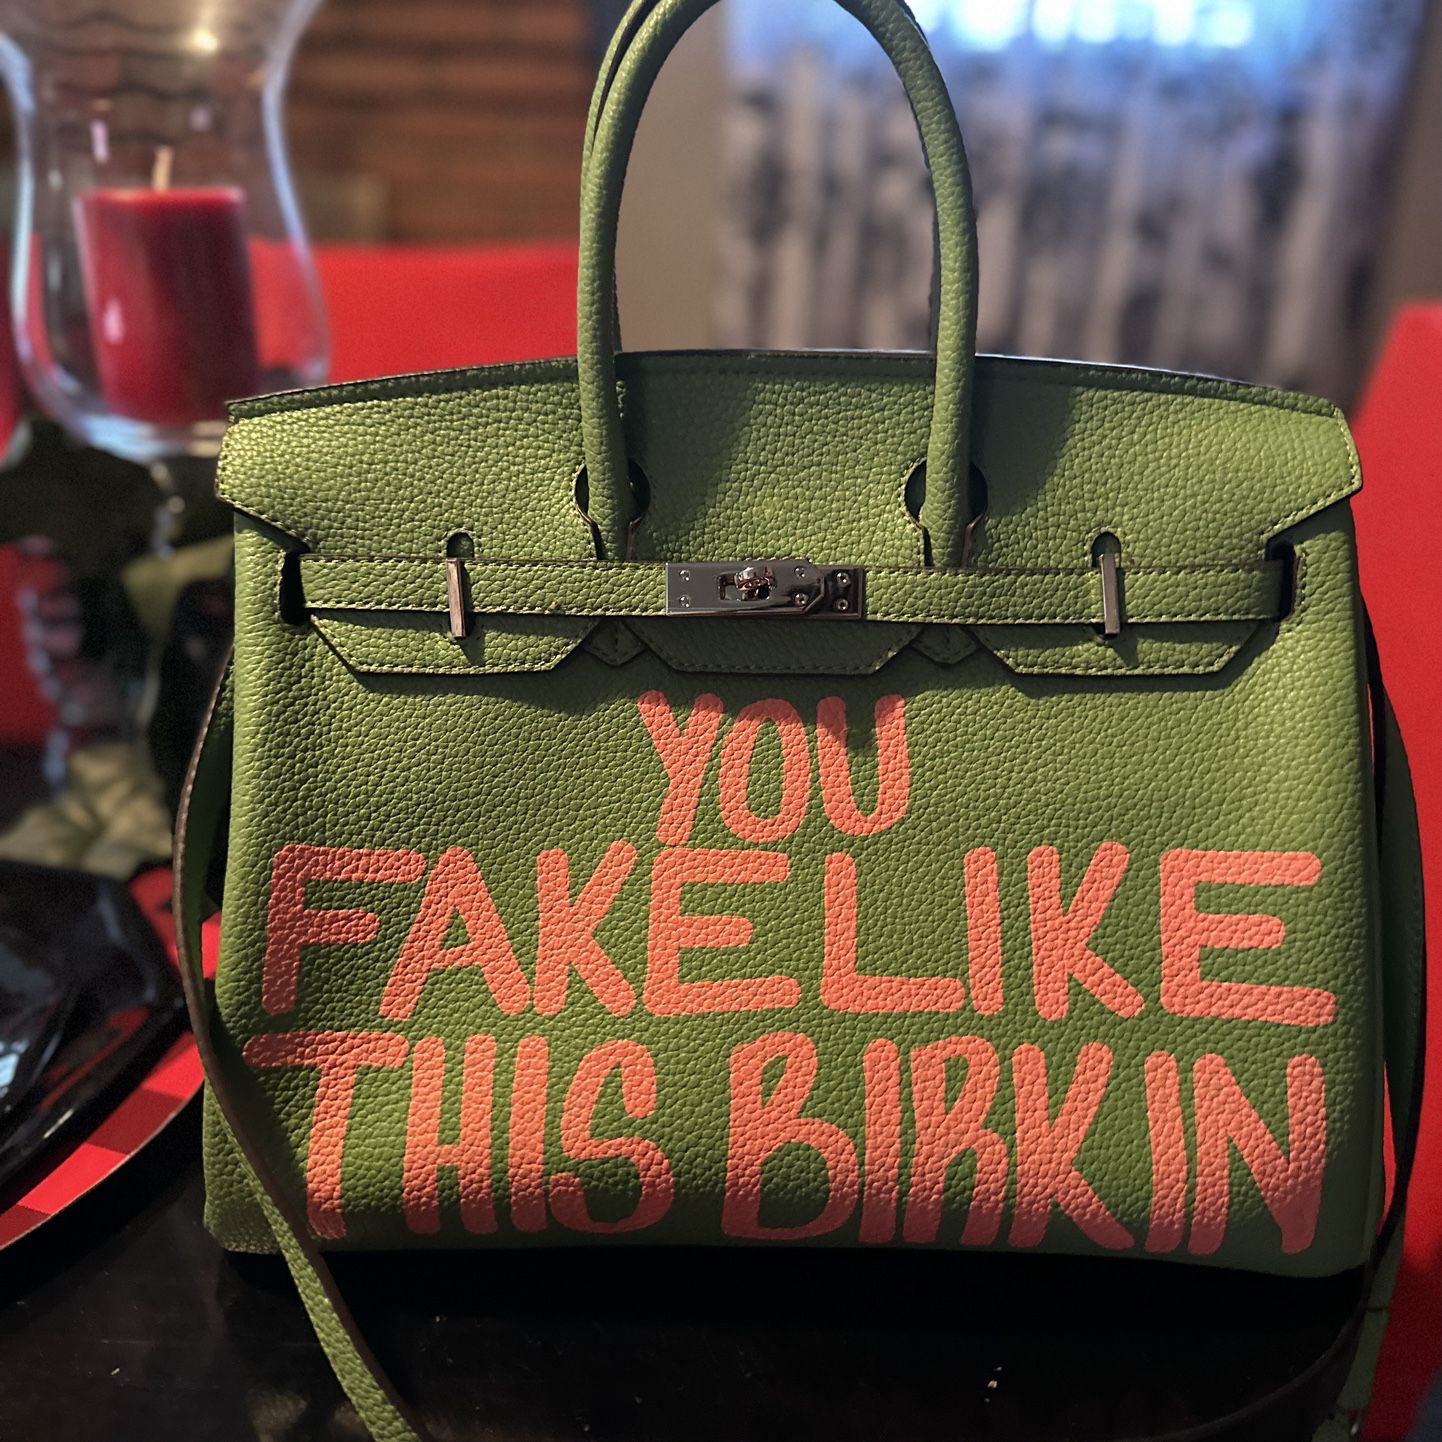 you fake like this birkin bag｜TikTok Search